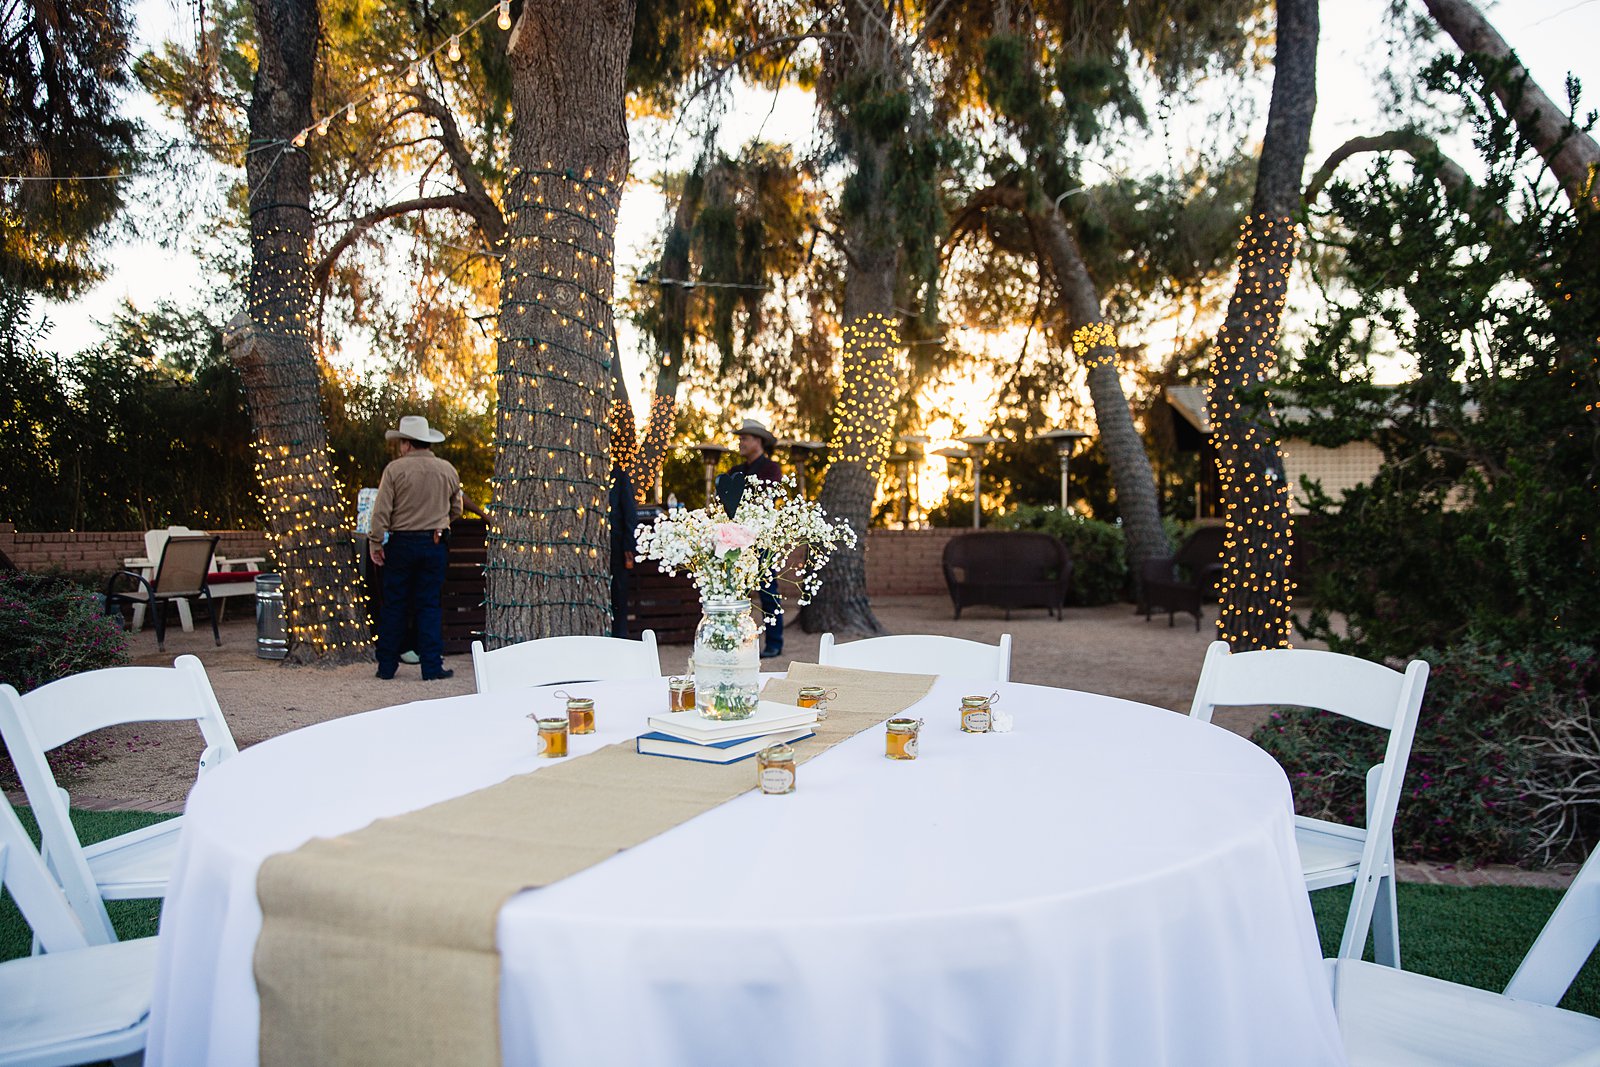 Wedding reception at Schnepf Farms by Arizona wedding photographer PMA Photography.